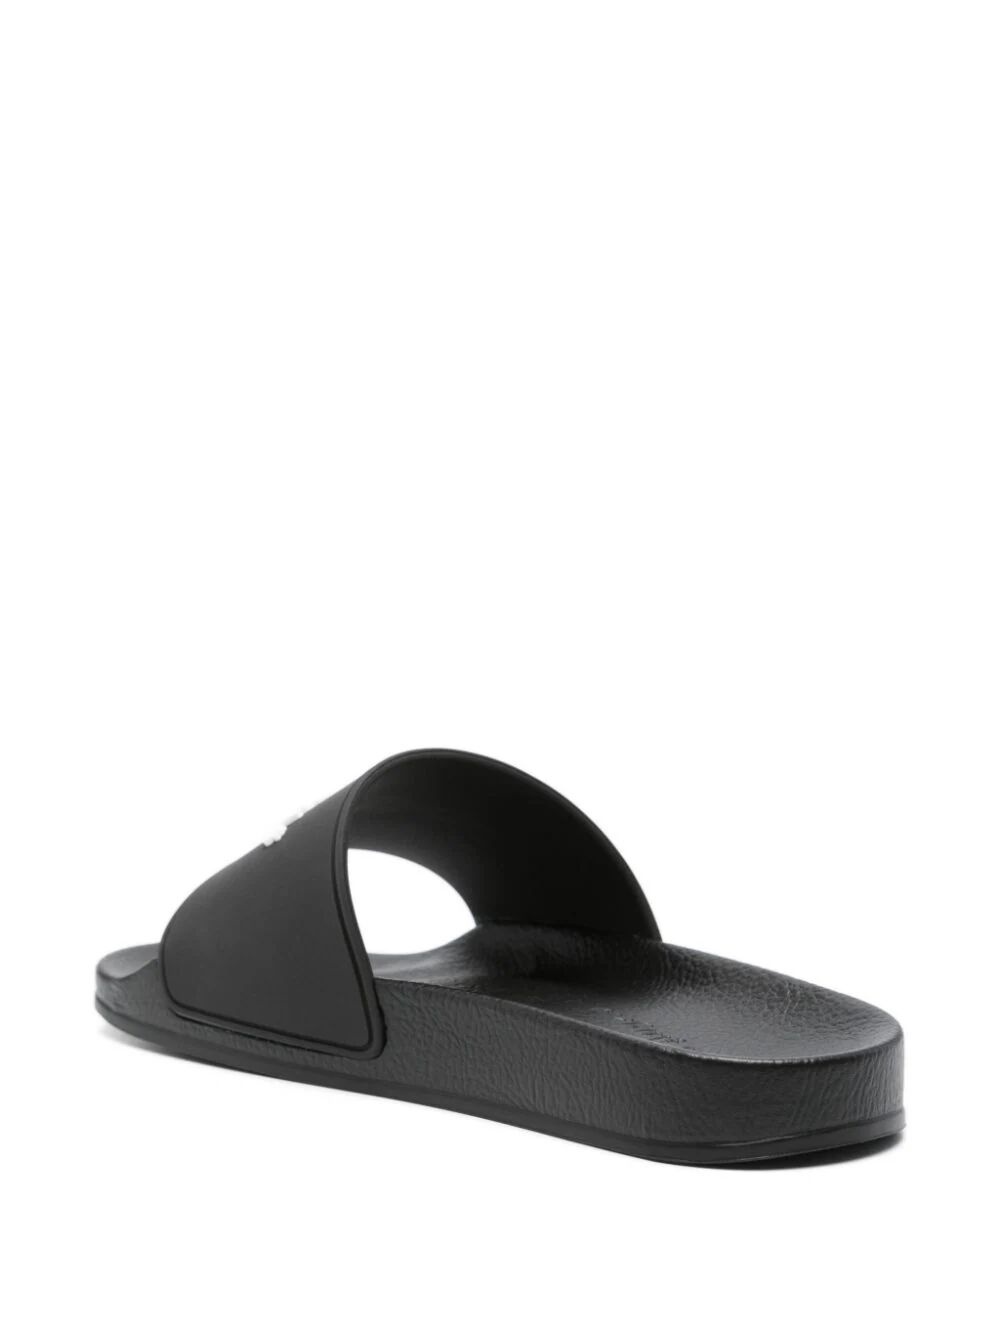 Slides sandals with embossed logo - 3